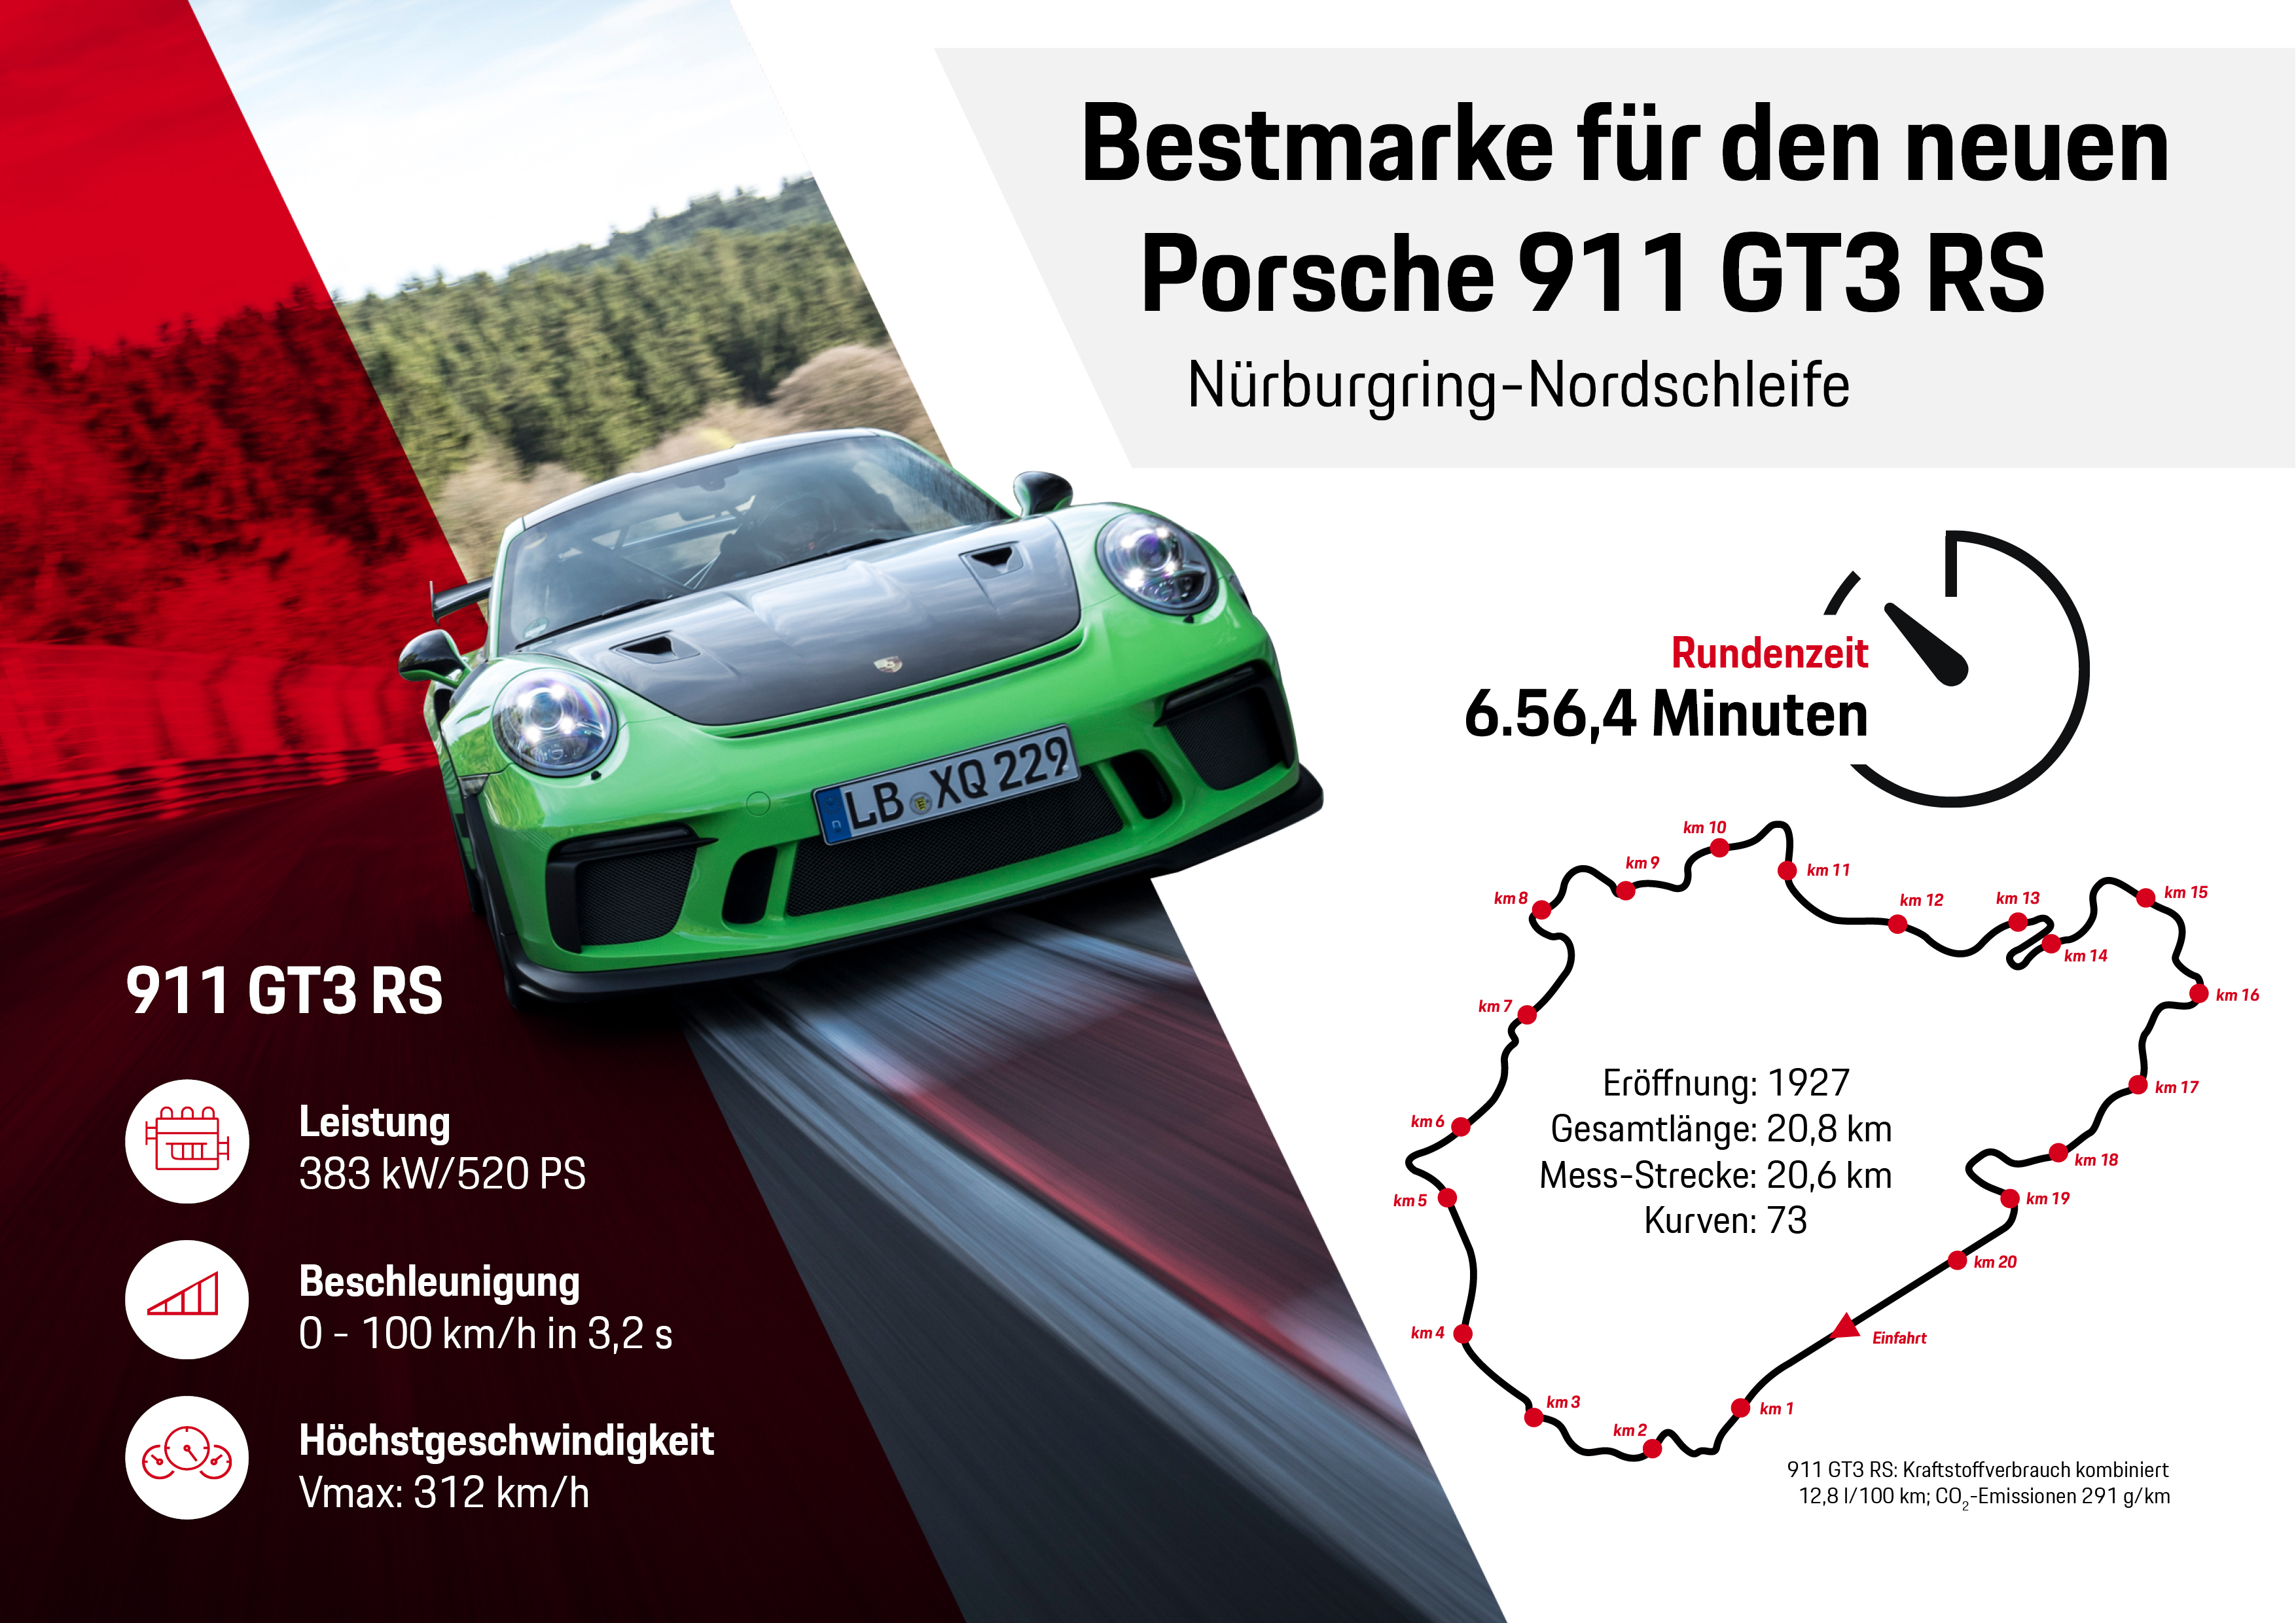 Bestmarke für den neuen Porsche 911 GT3 RS, Inforgrafik, 2018, Porsche AG